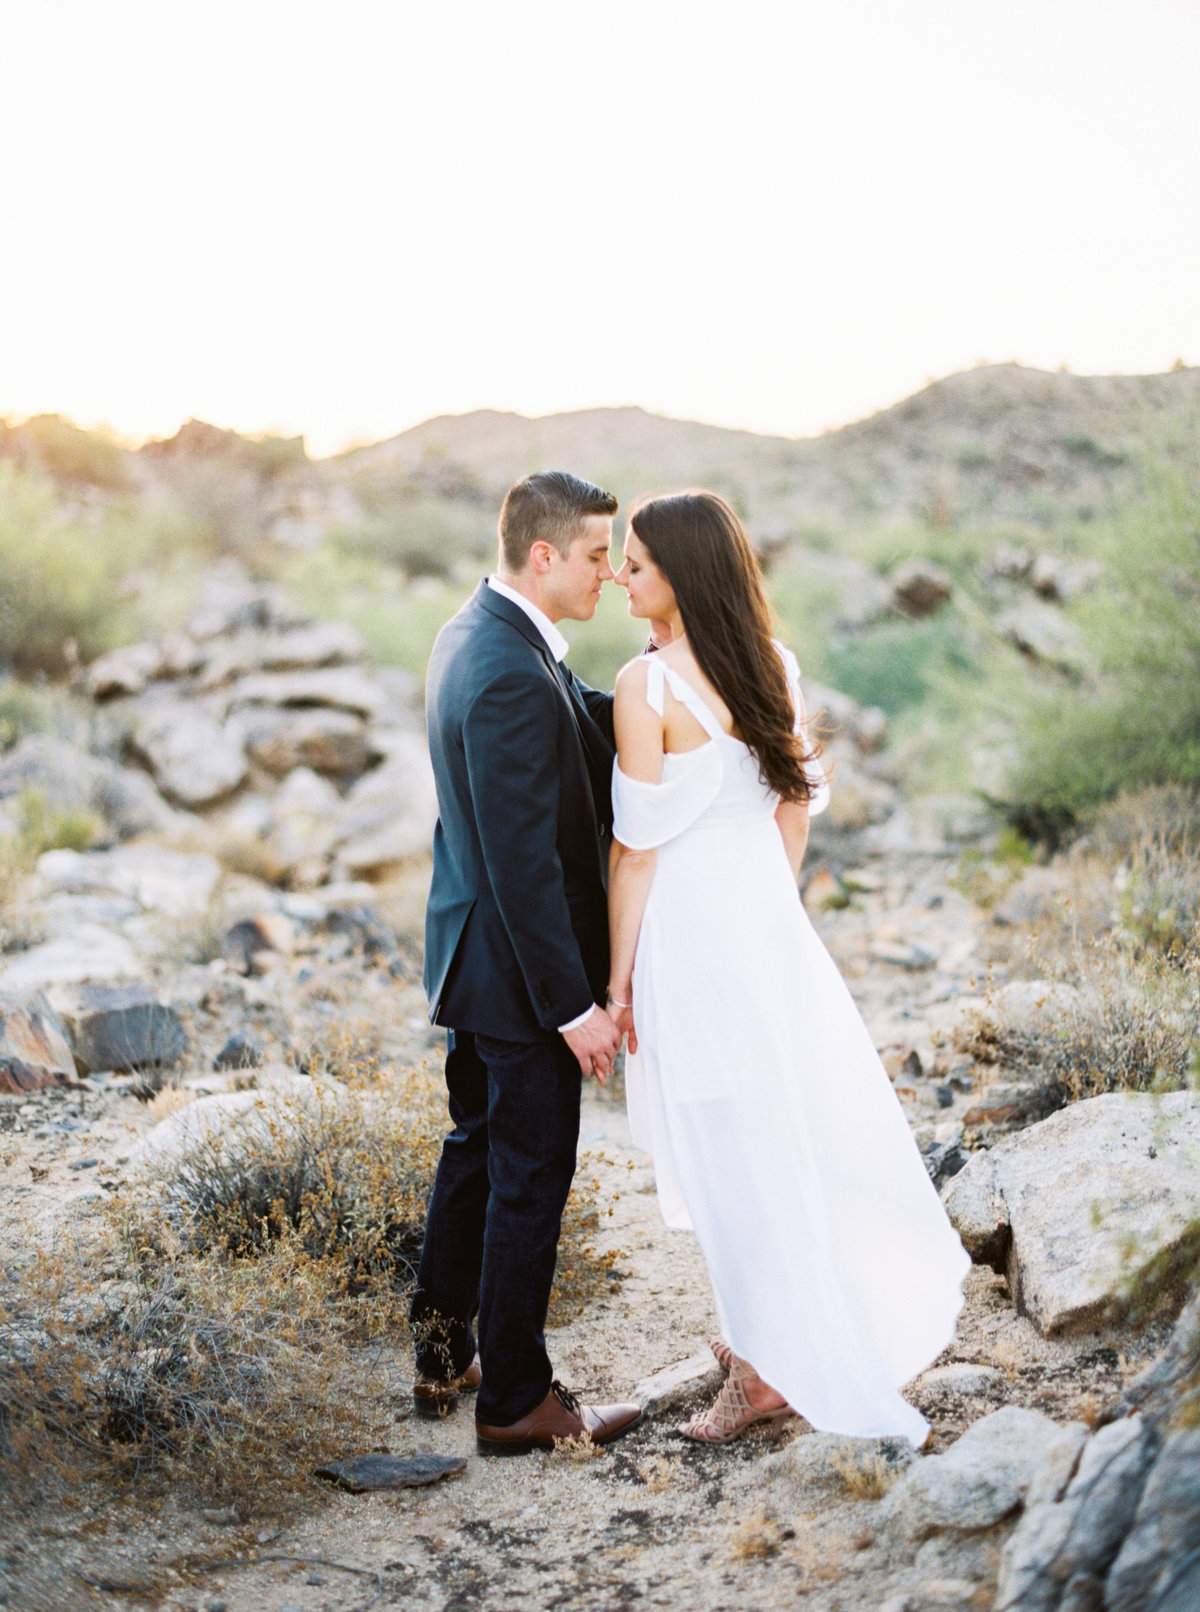 Sara & Adam | Engagement Session | South Mountain | Mary Claire Photography | Arizona & Destination Fine Art Wedding Photographer